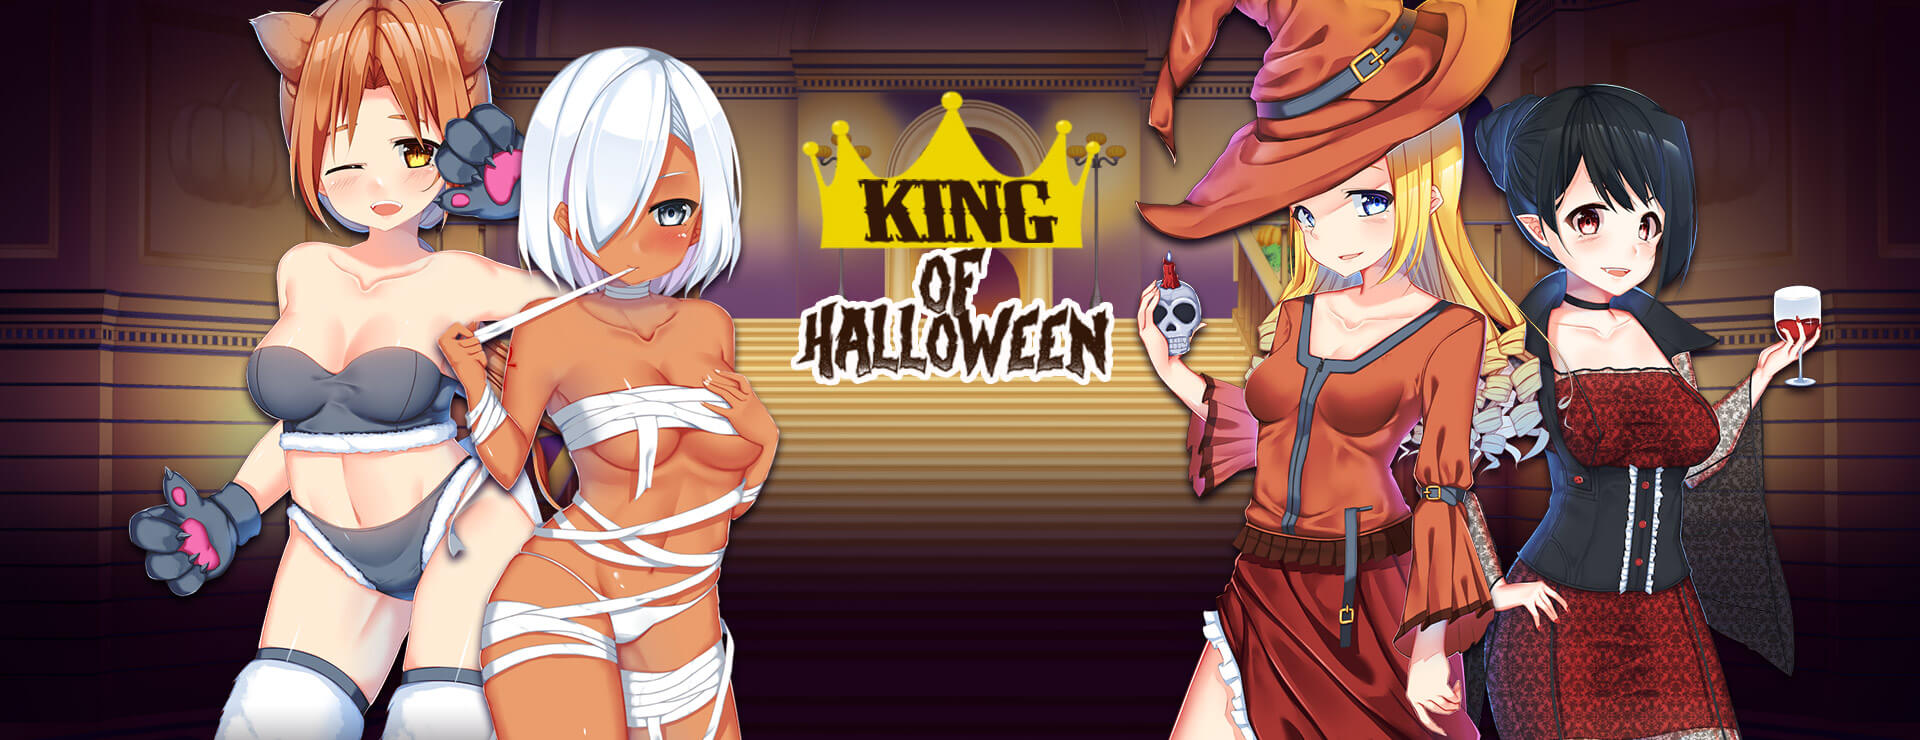 King of Halloween - Novela Visual Juego